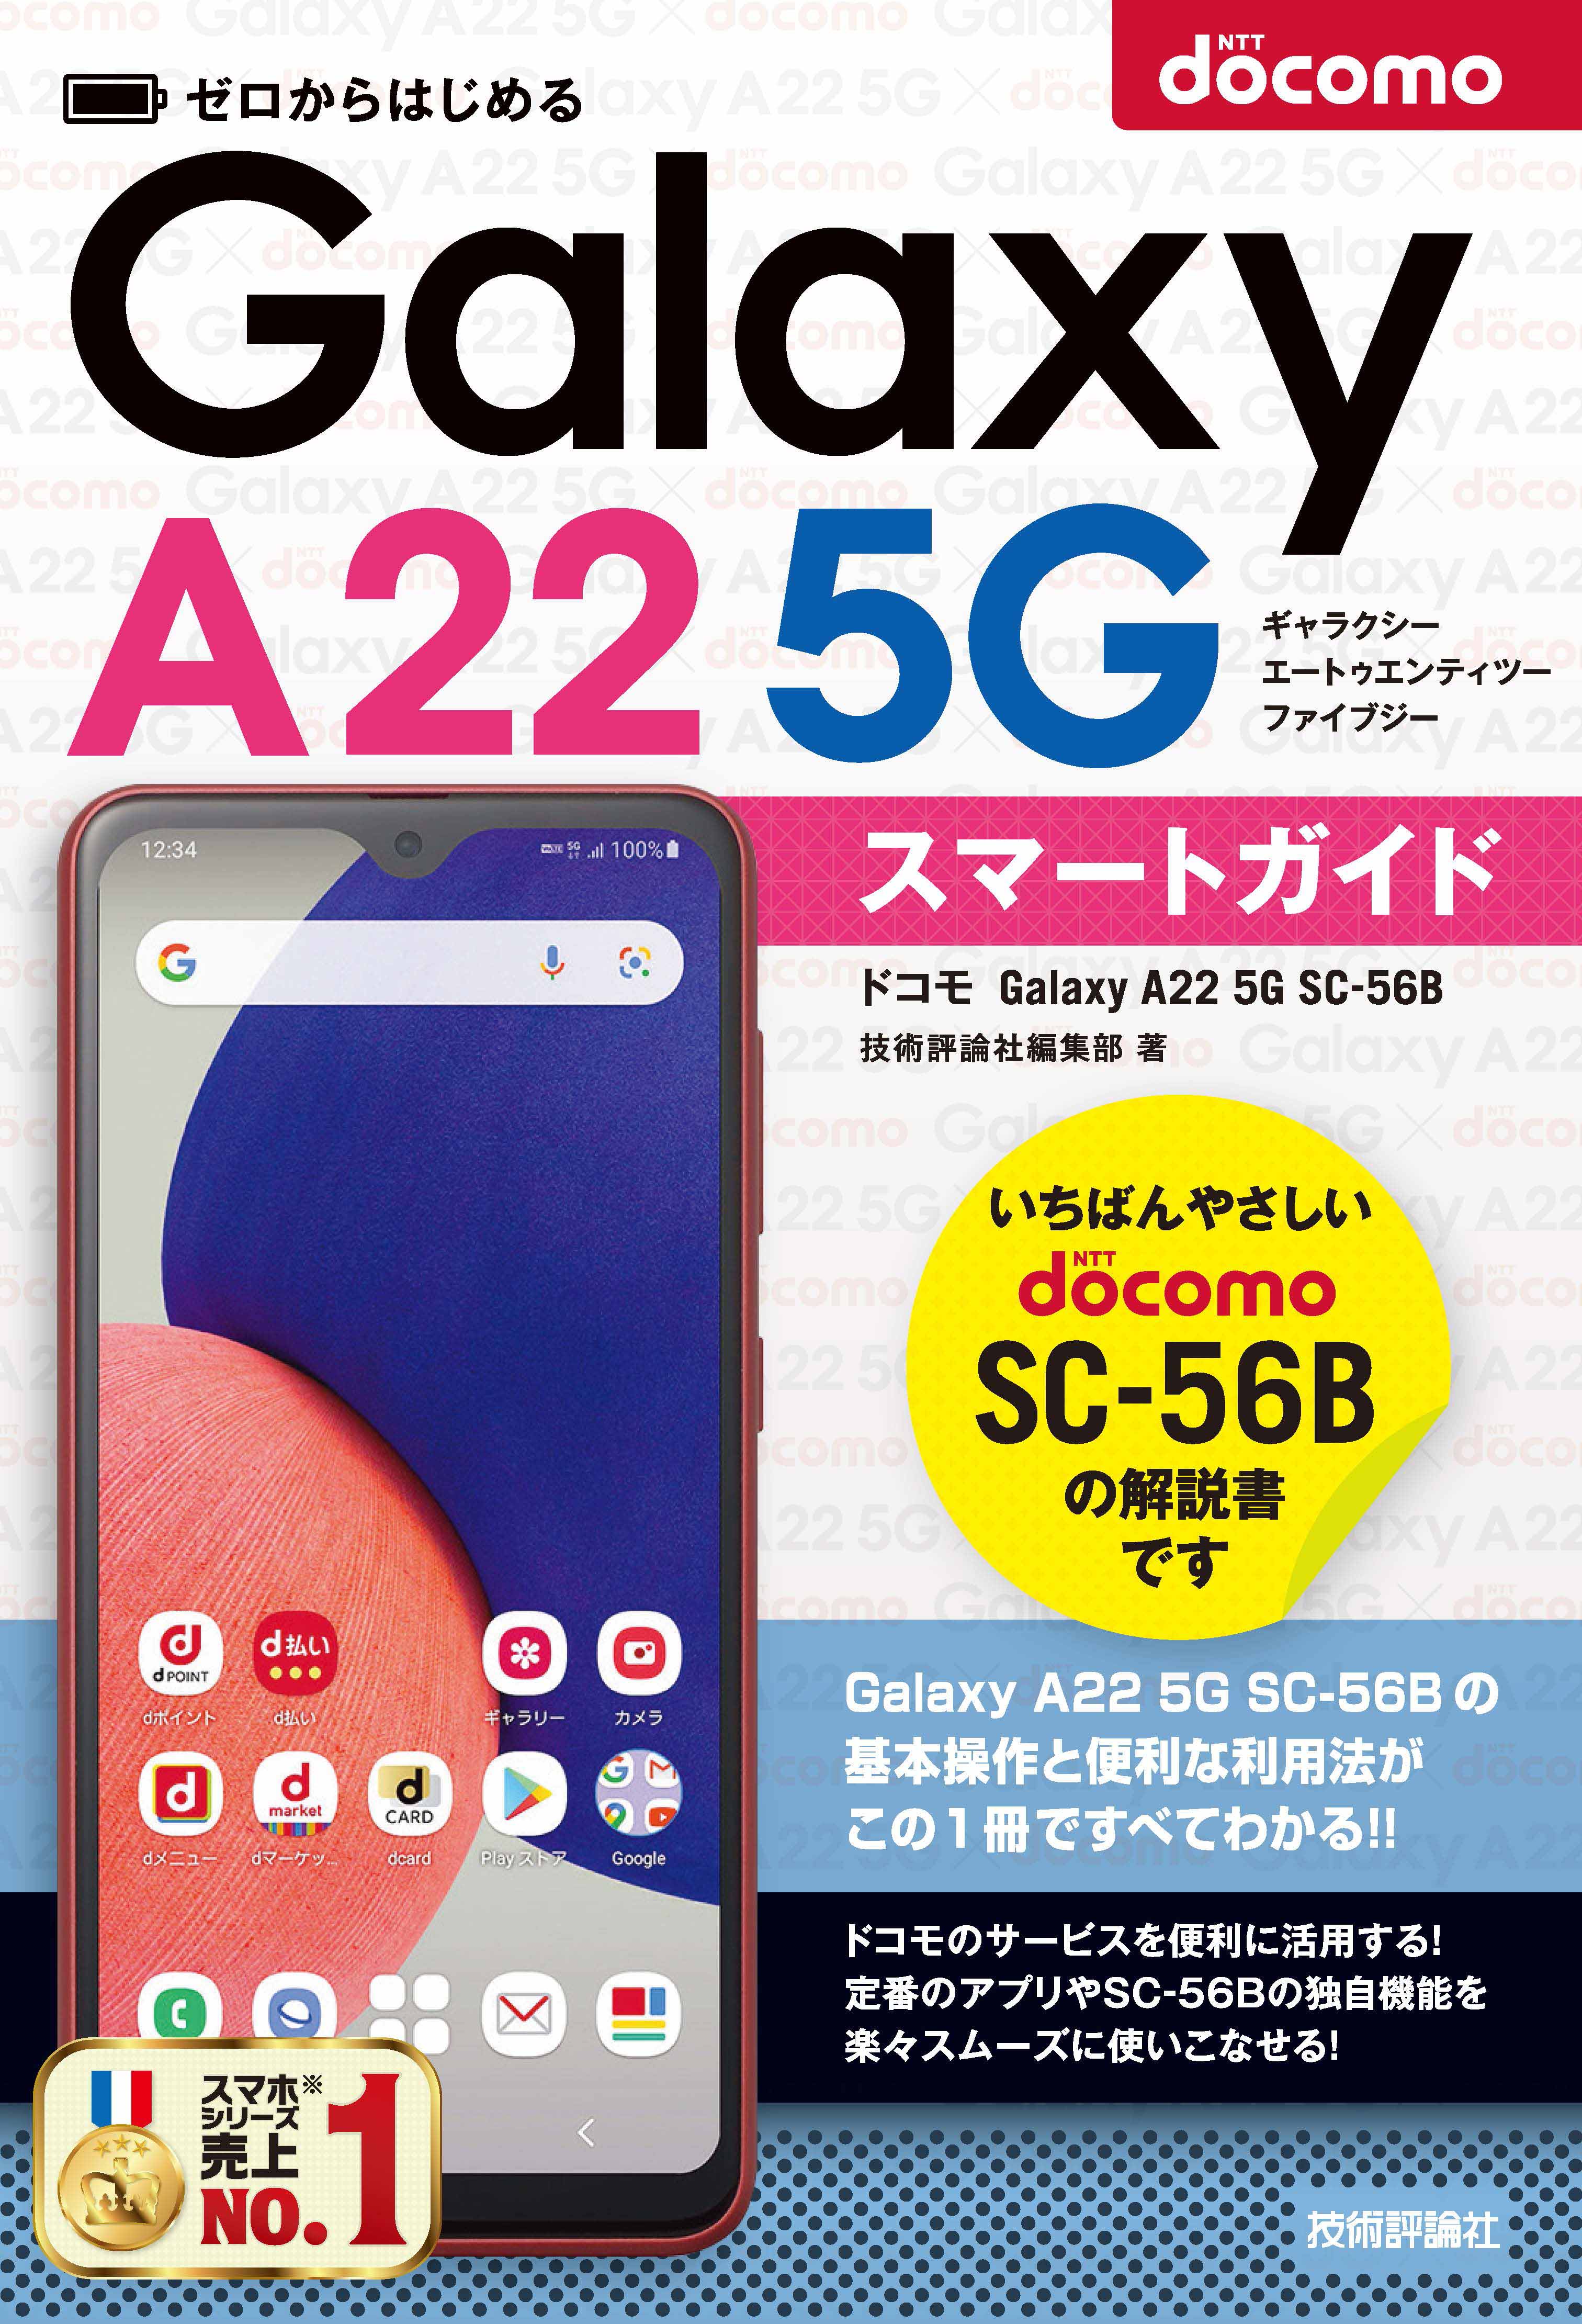 docomo Galaxy A22 5G